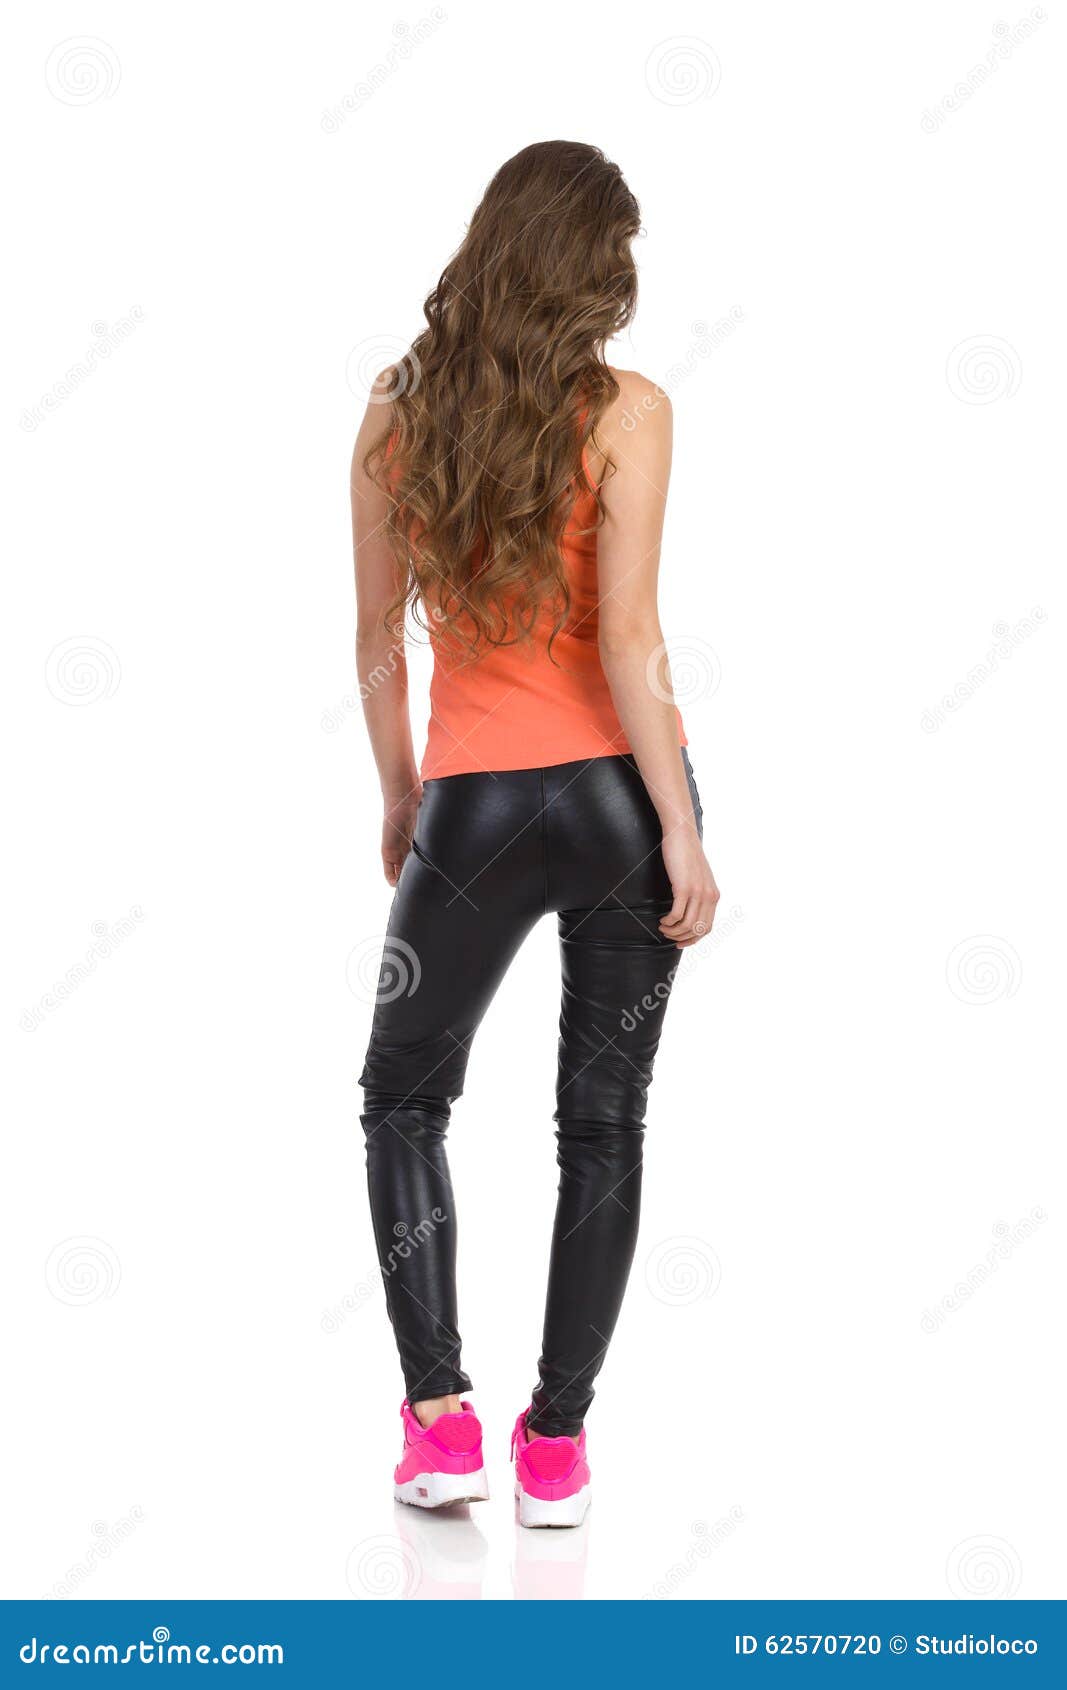 Buy MANGO Women Black Regular Fit Solid Faux Leather Regular Trousers   Trousers for Women 2202932  Myntra